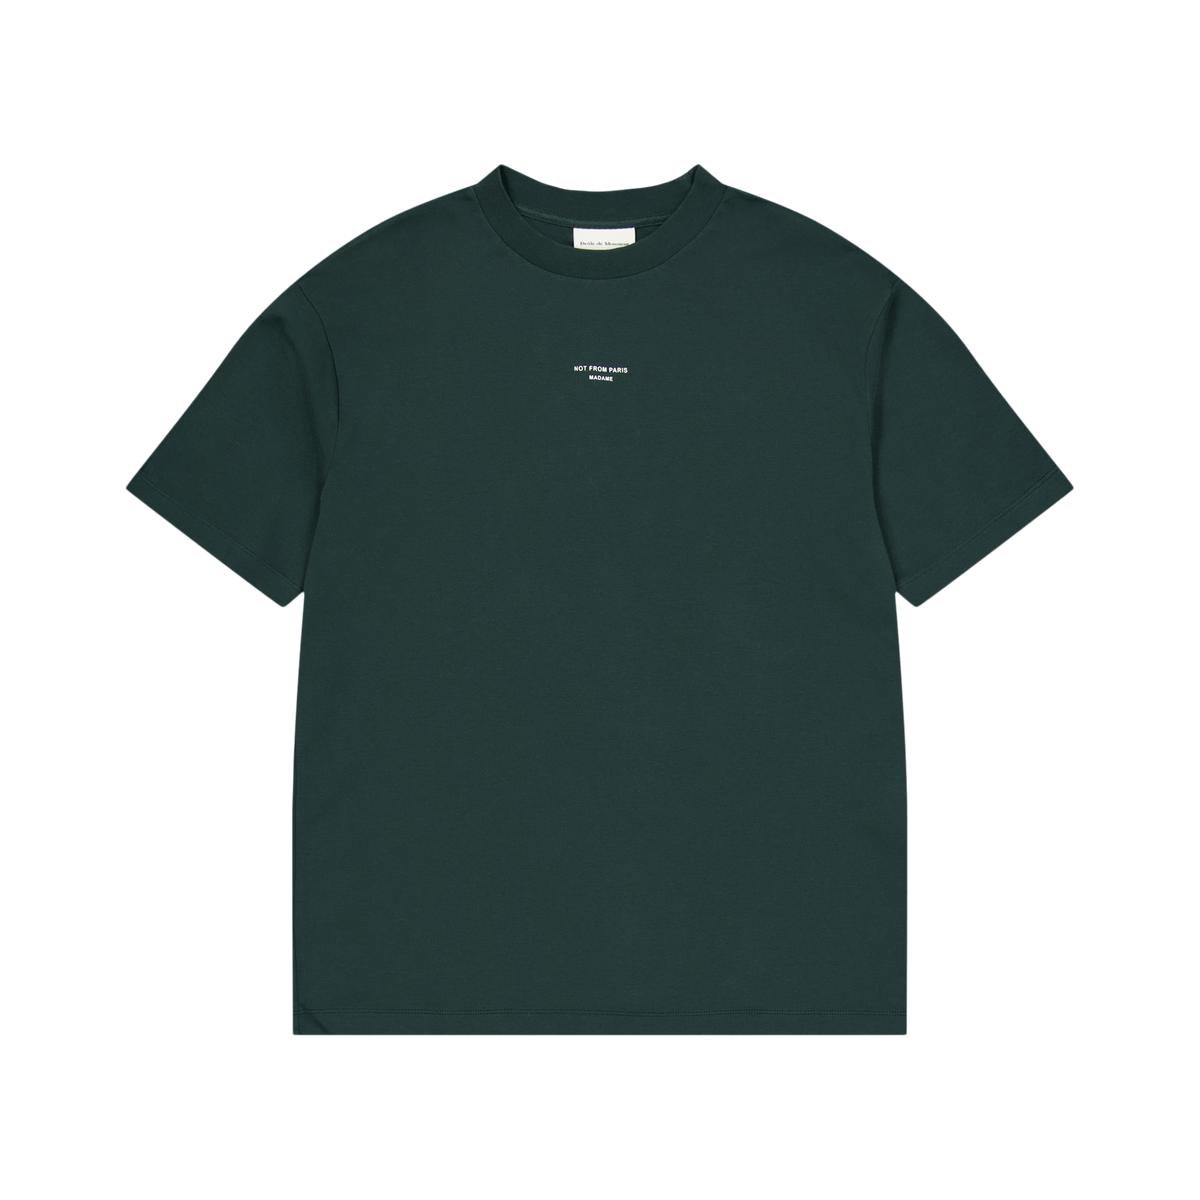 Le T-shirt Classique Nfpm Dark Green